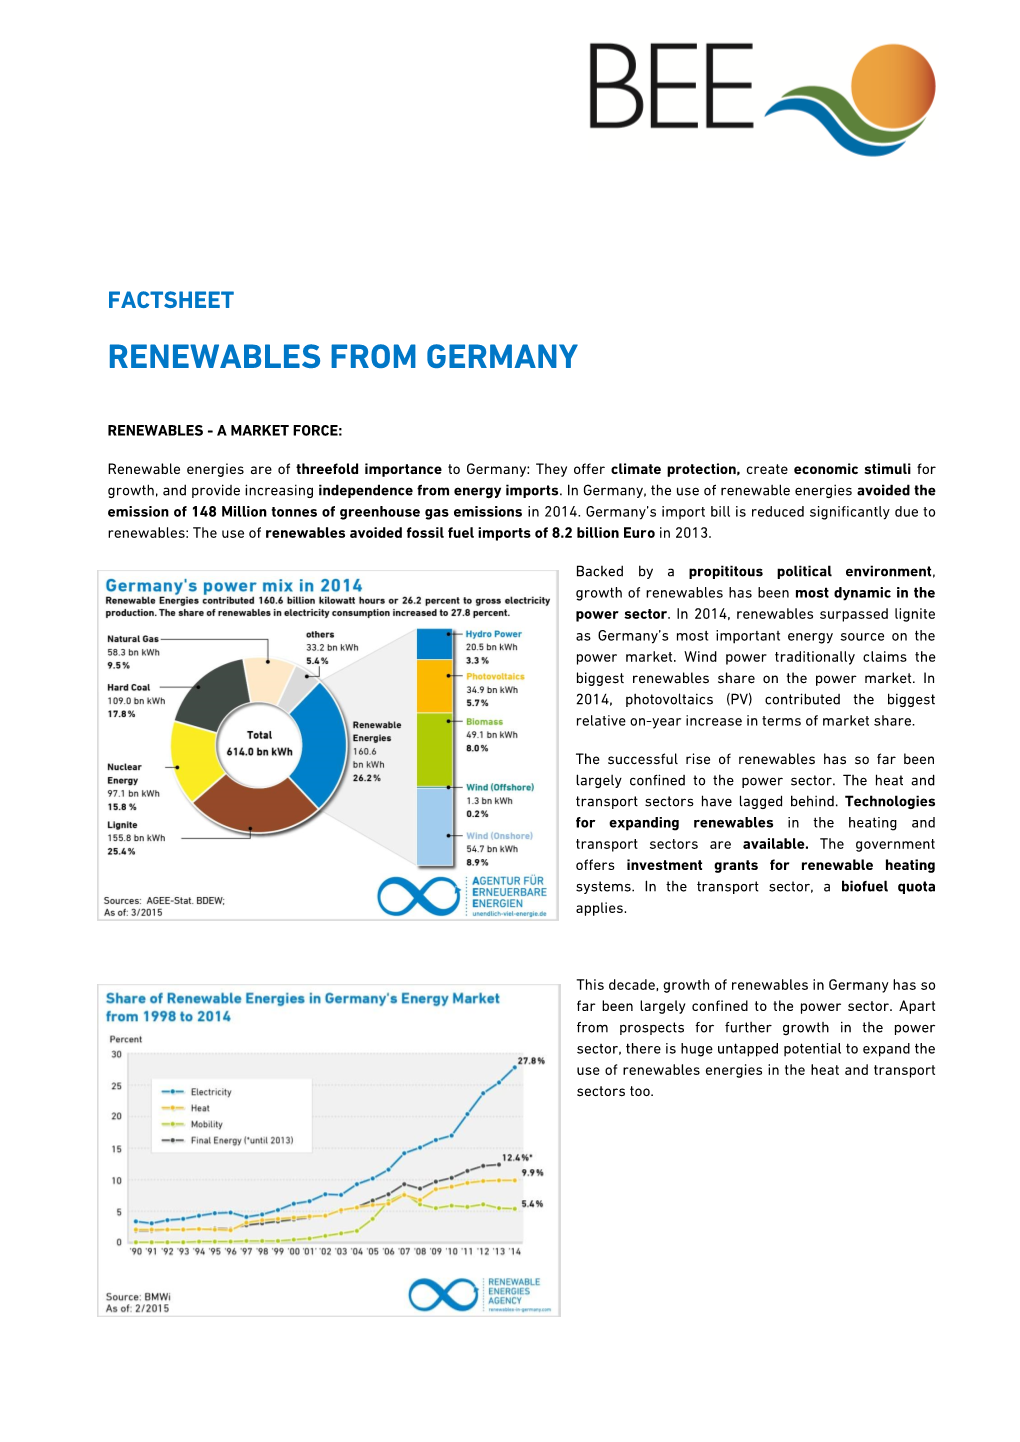 Factsheet: Renewables from Germany